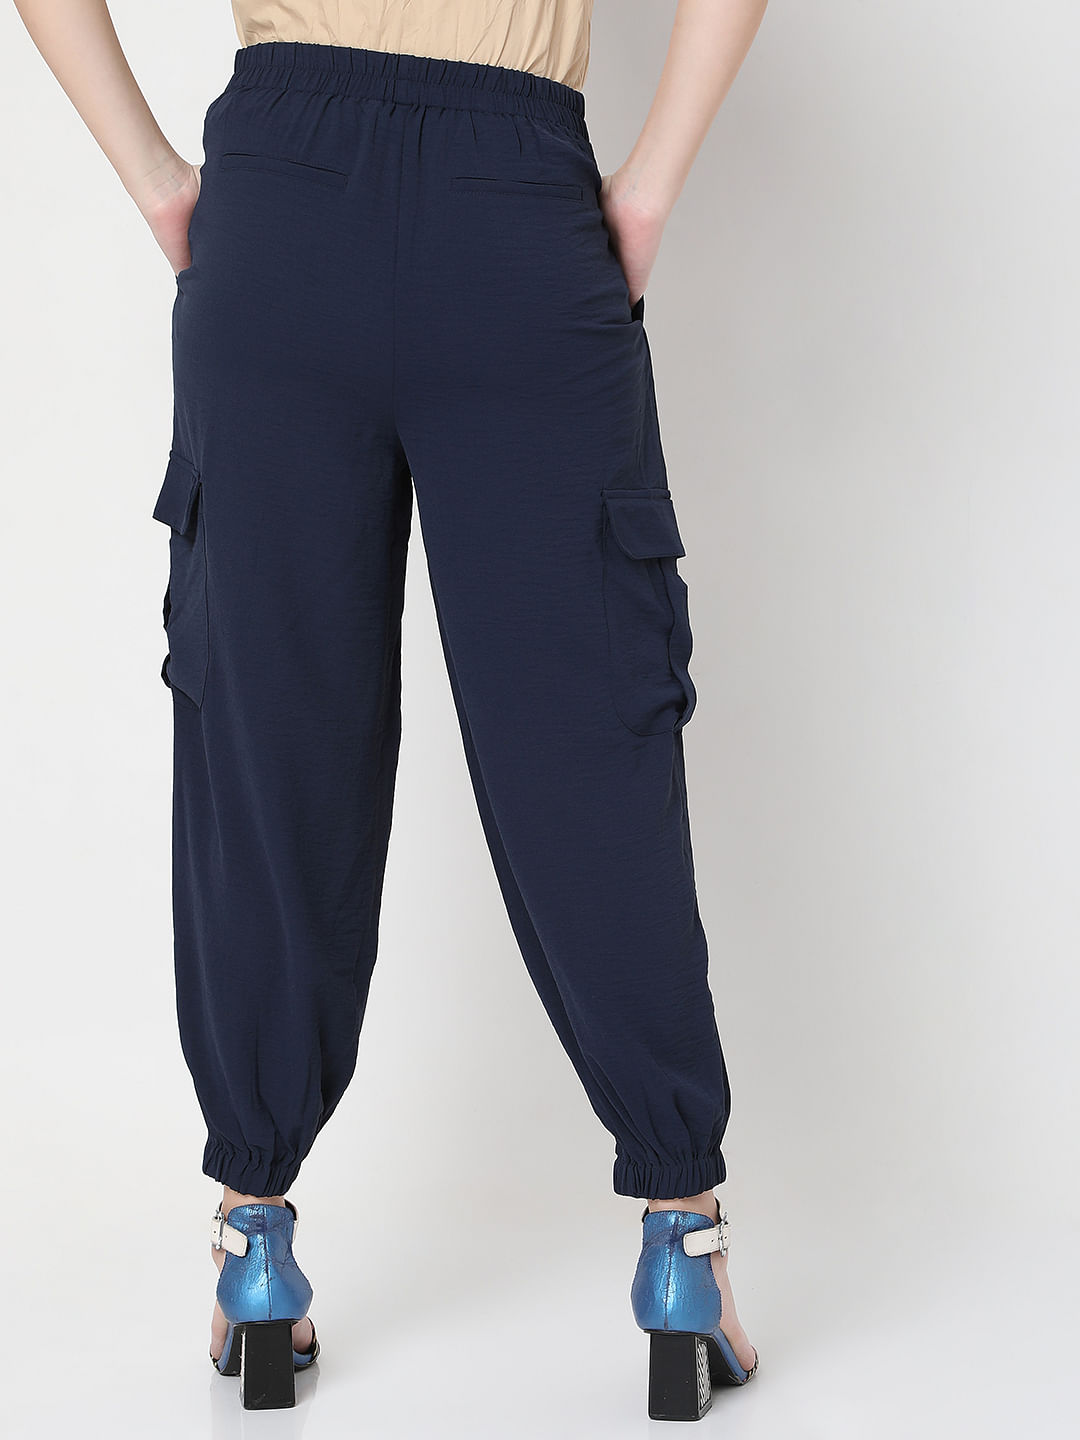 Men's - Organic Cotton Baggy Cargo Pants in Eclipse Navy | Superdry IE